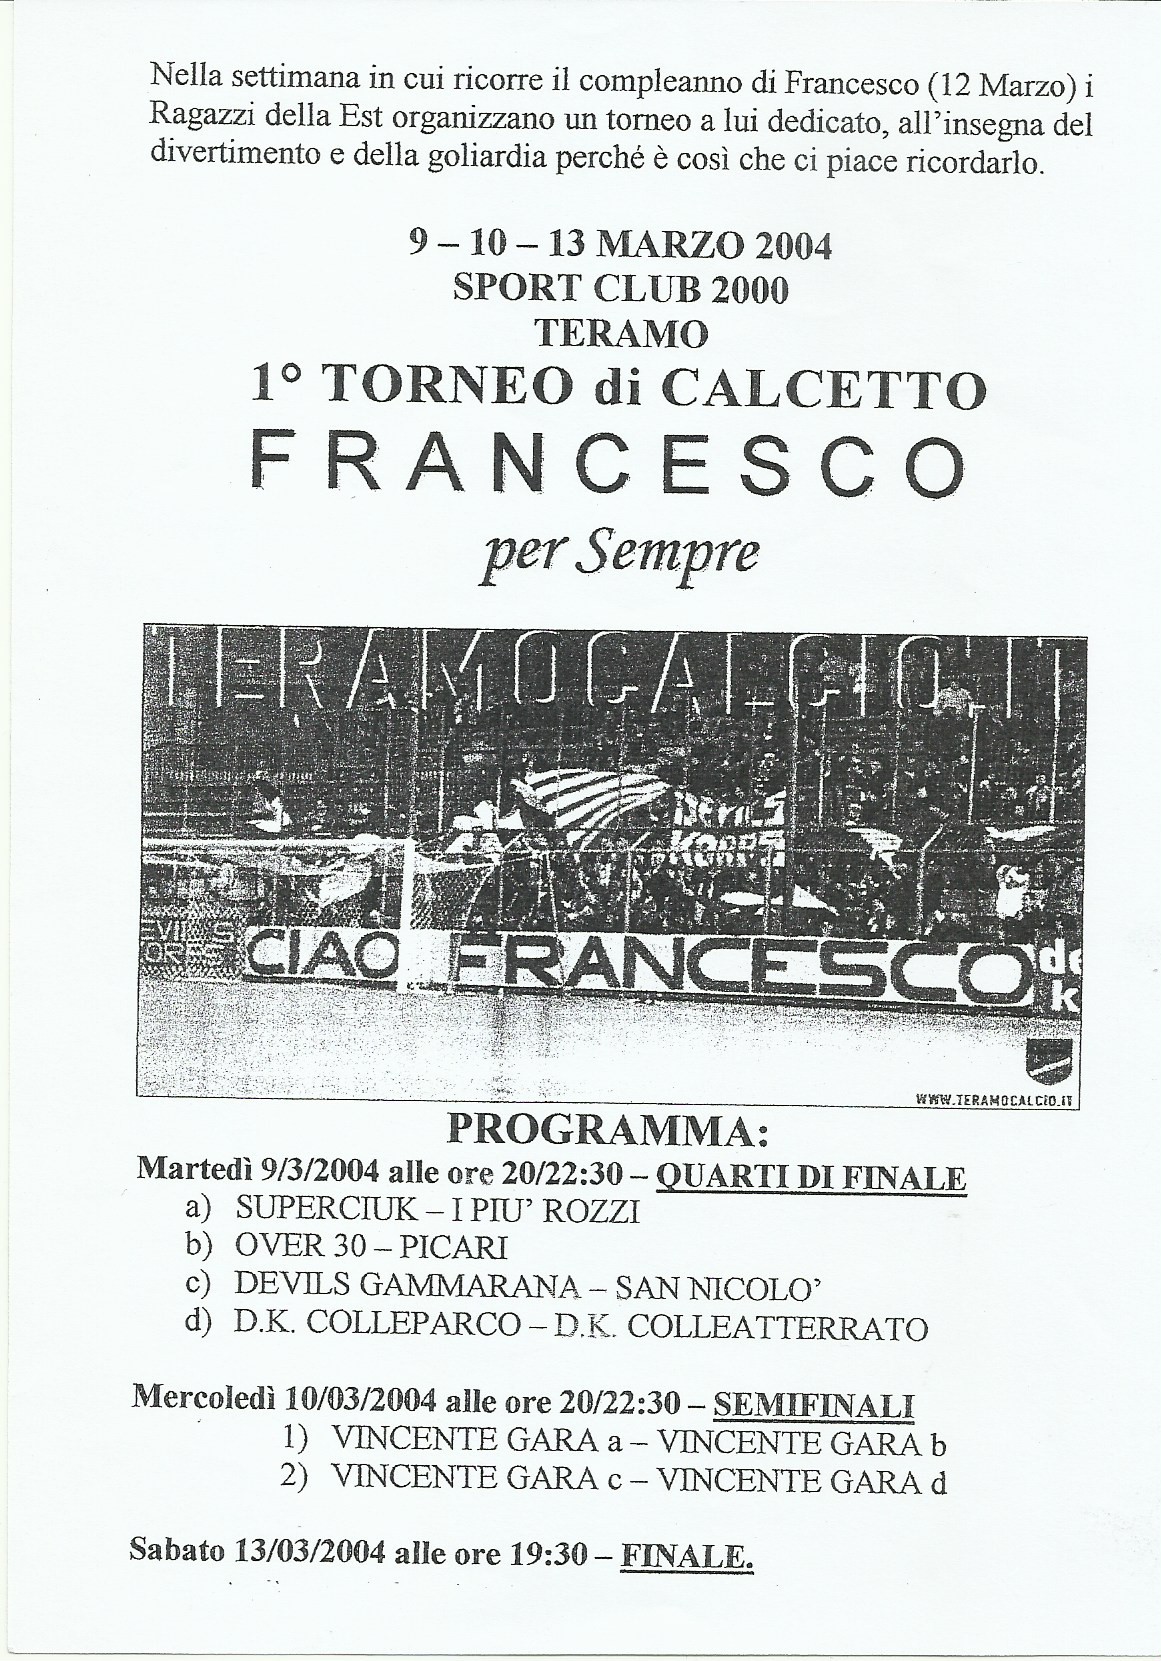 locandina 1 torneo Francesco per sempre